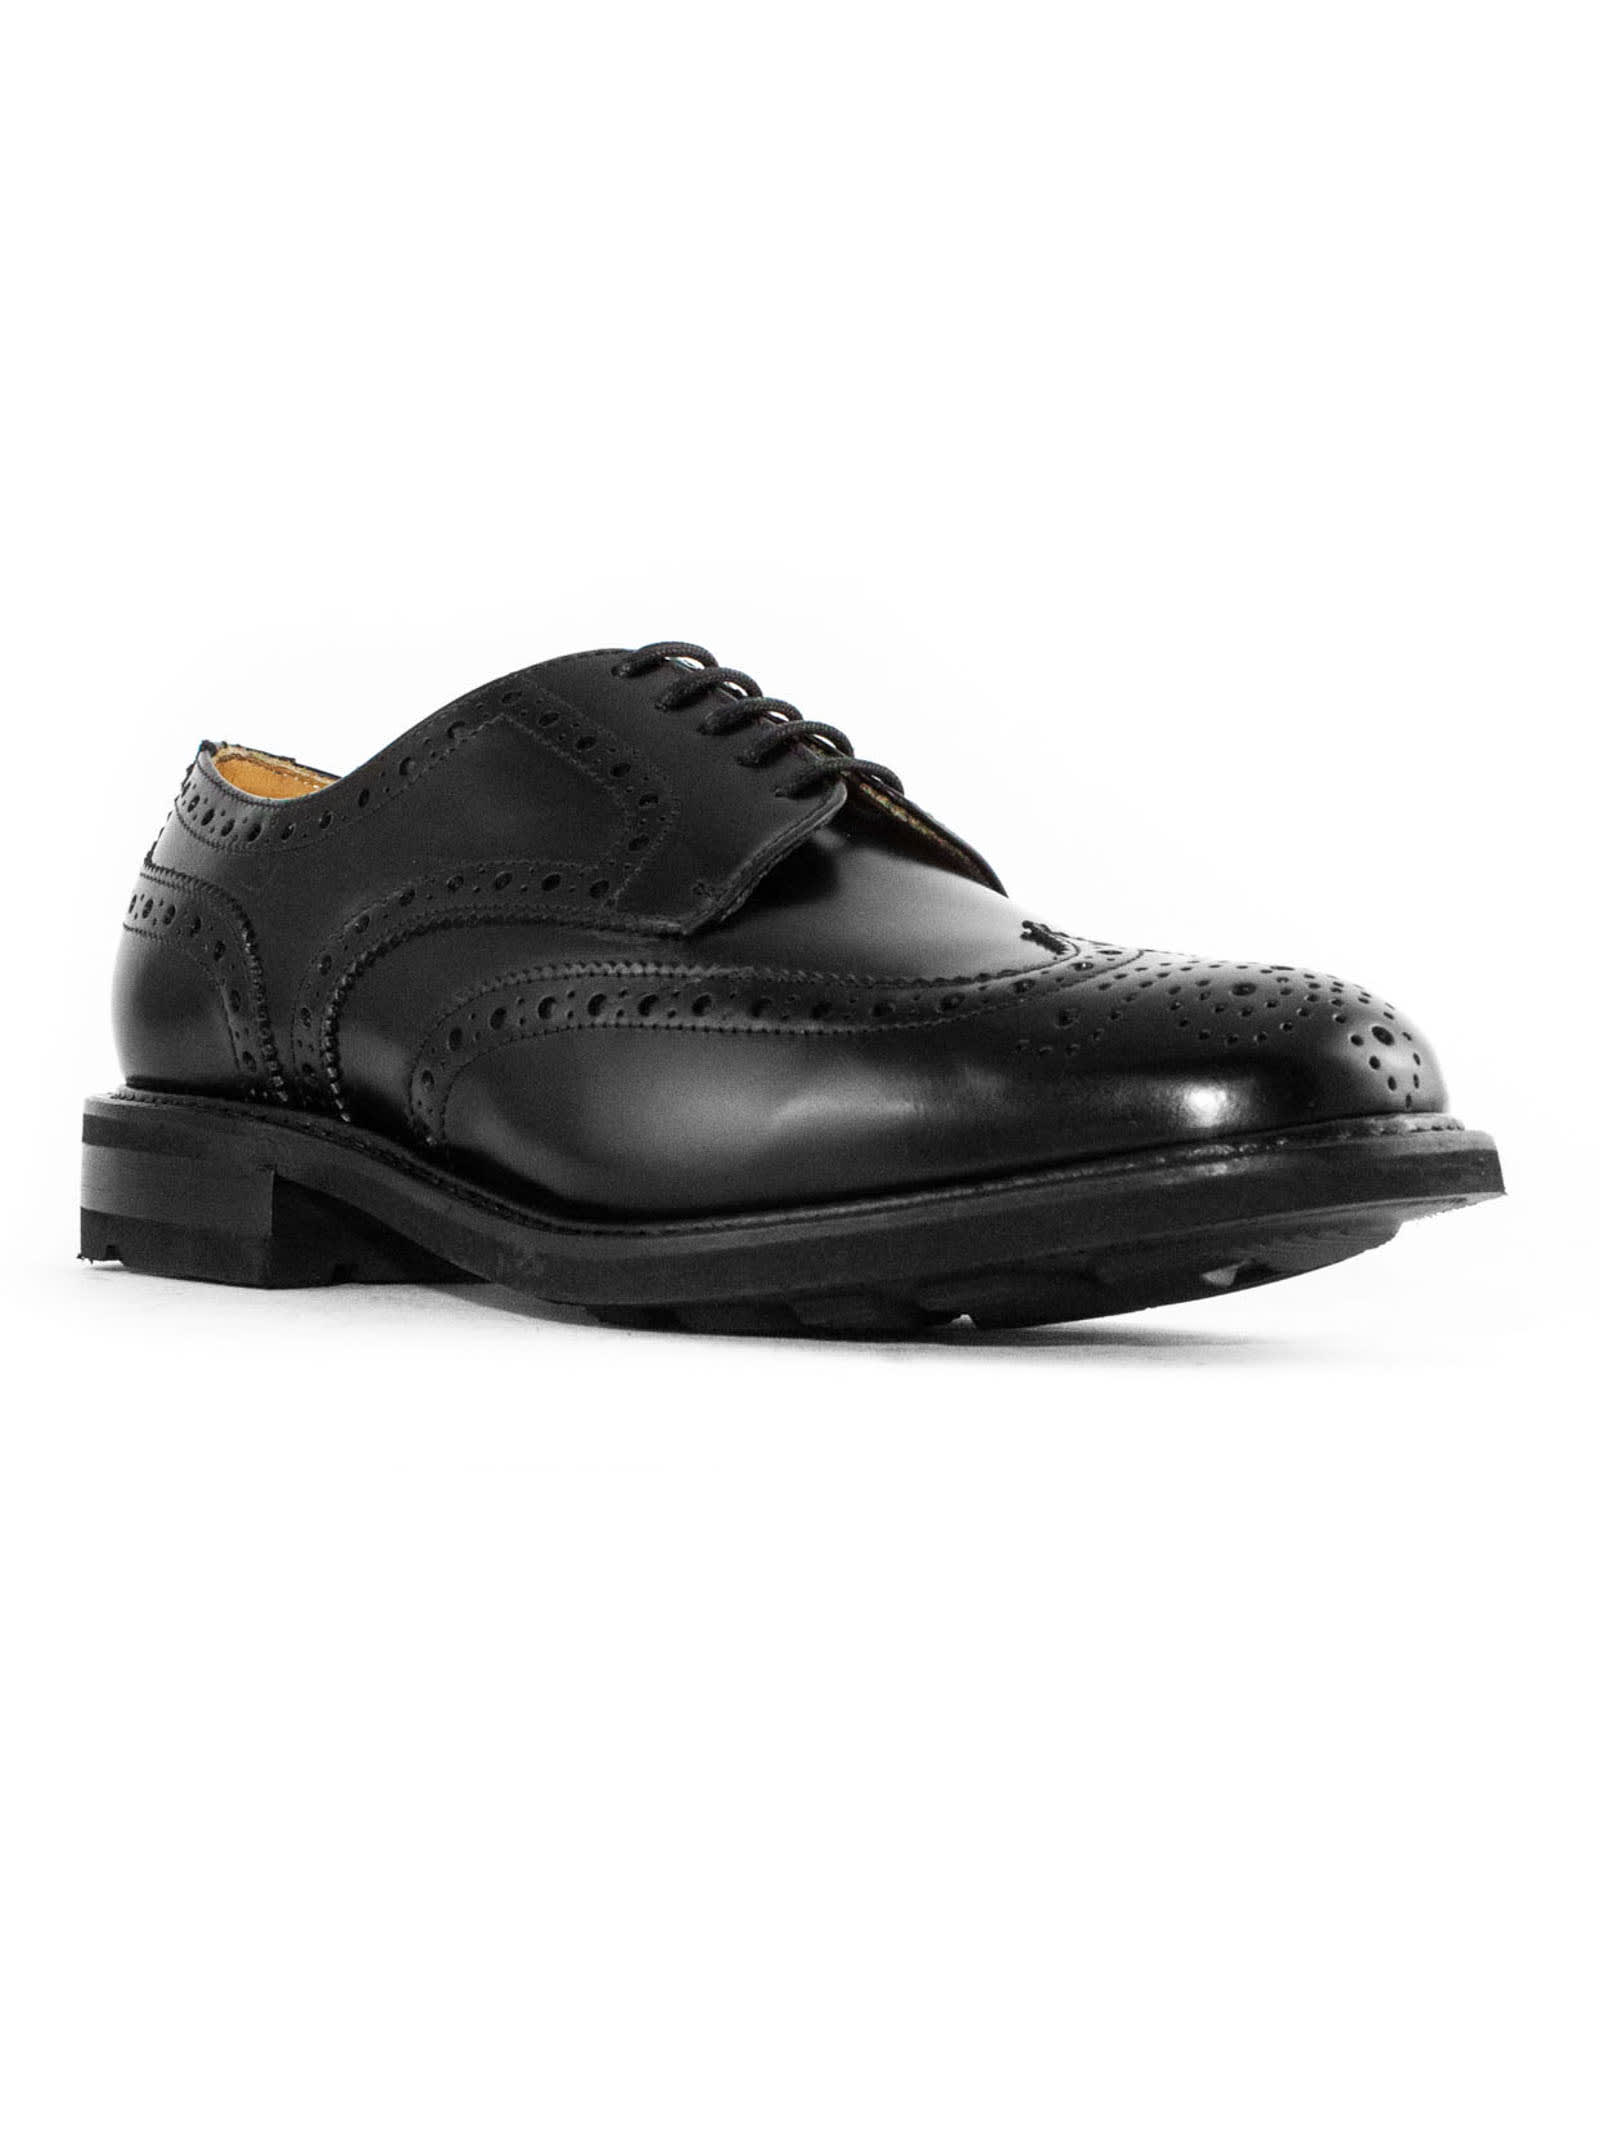 Shop Berwick 1707 Black Shiny Leather Derby Shoes